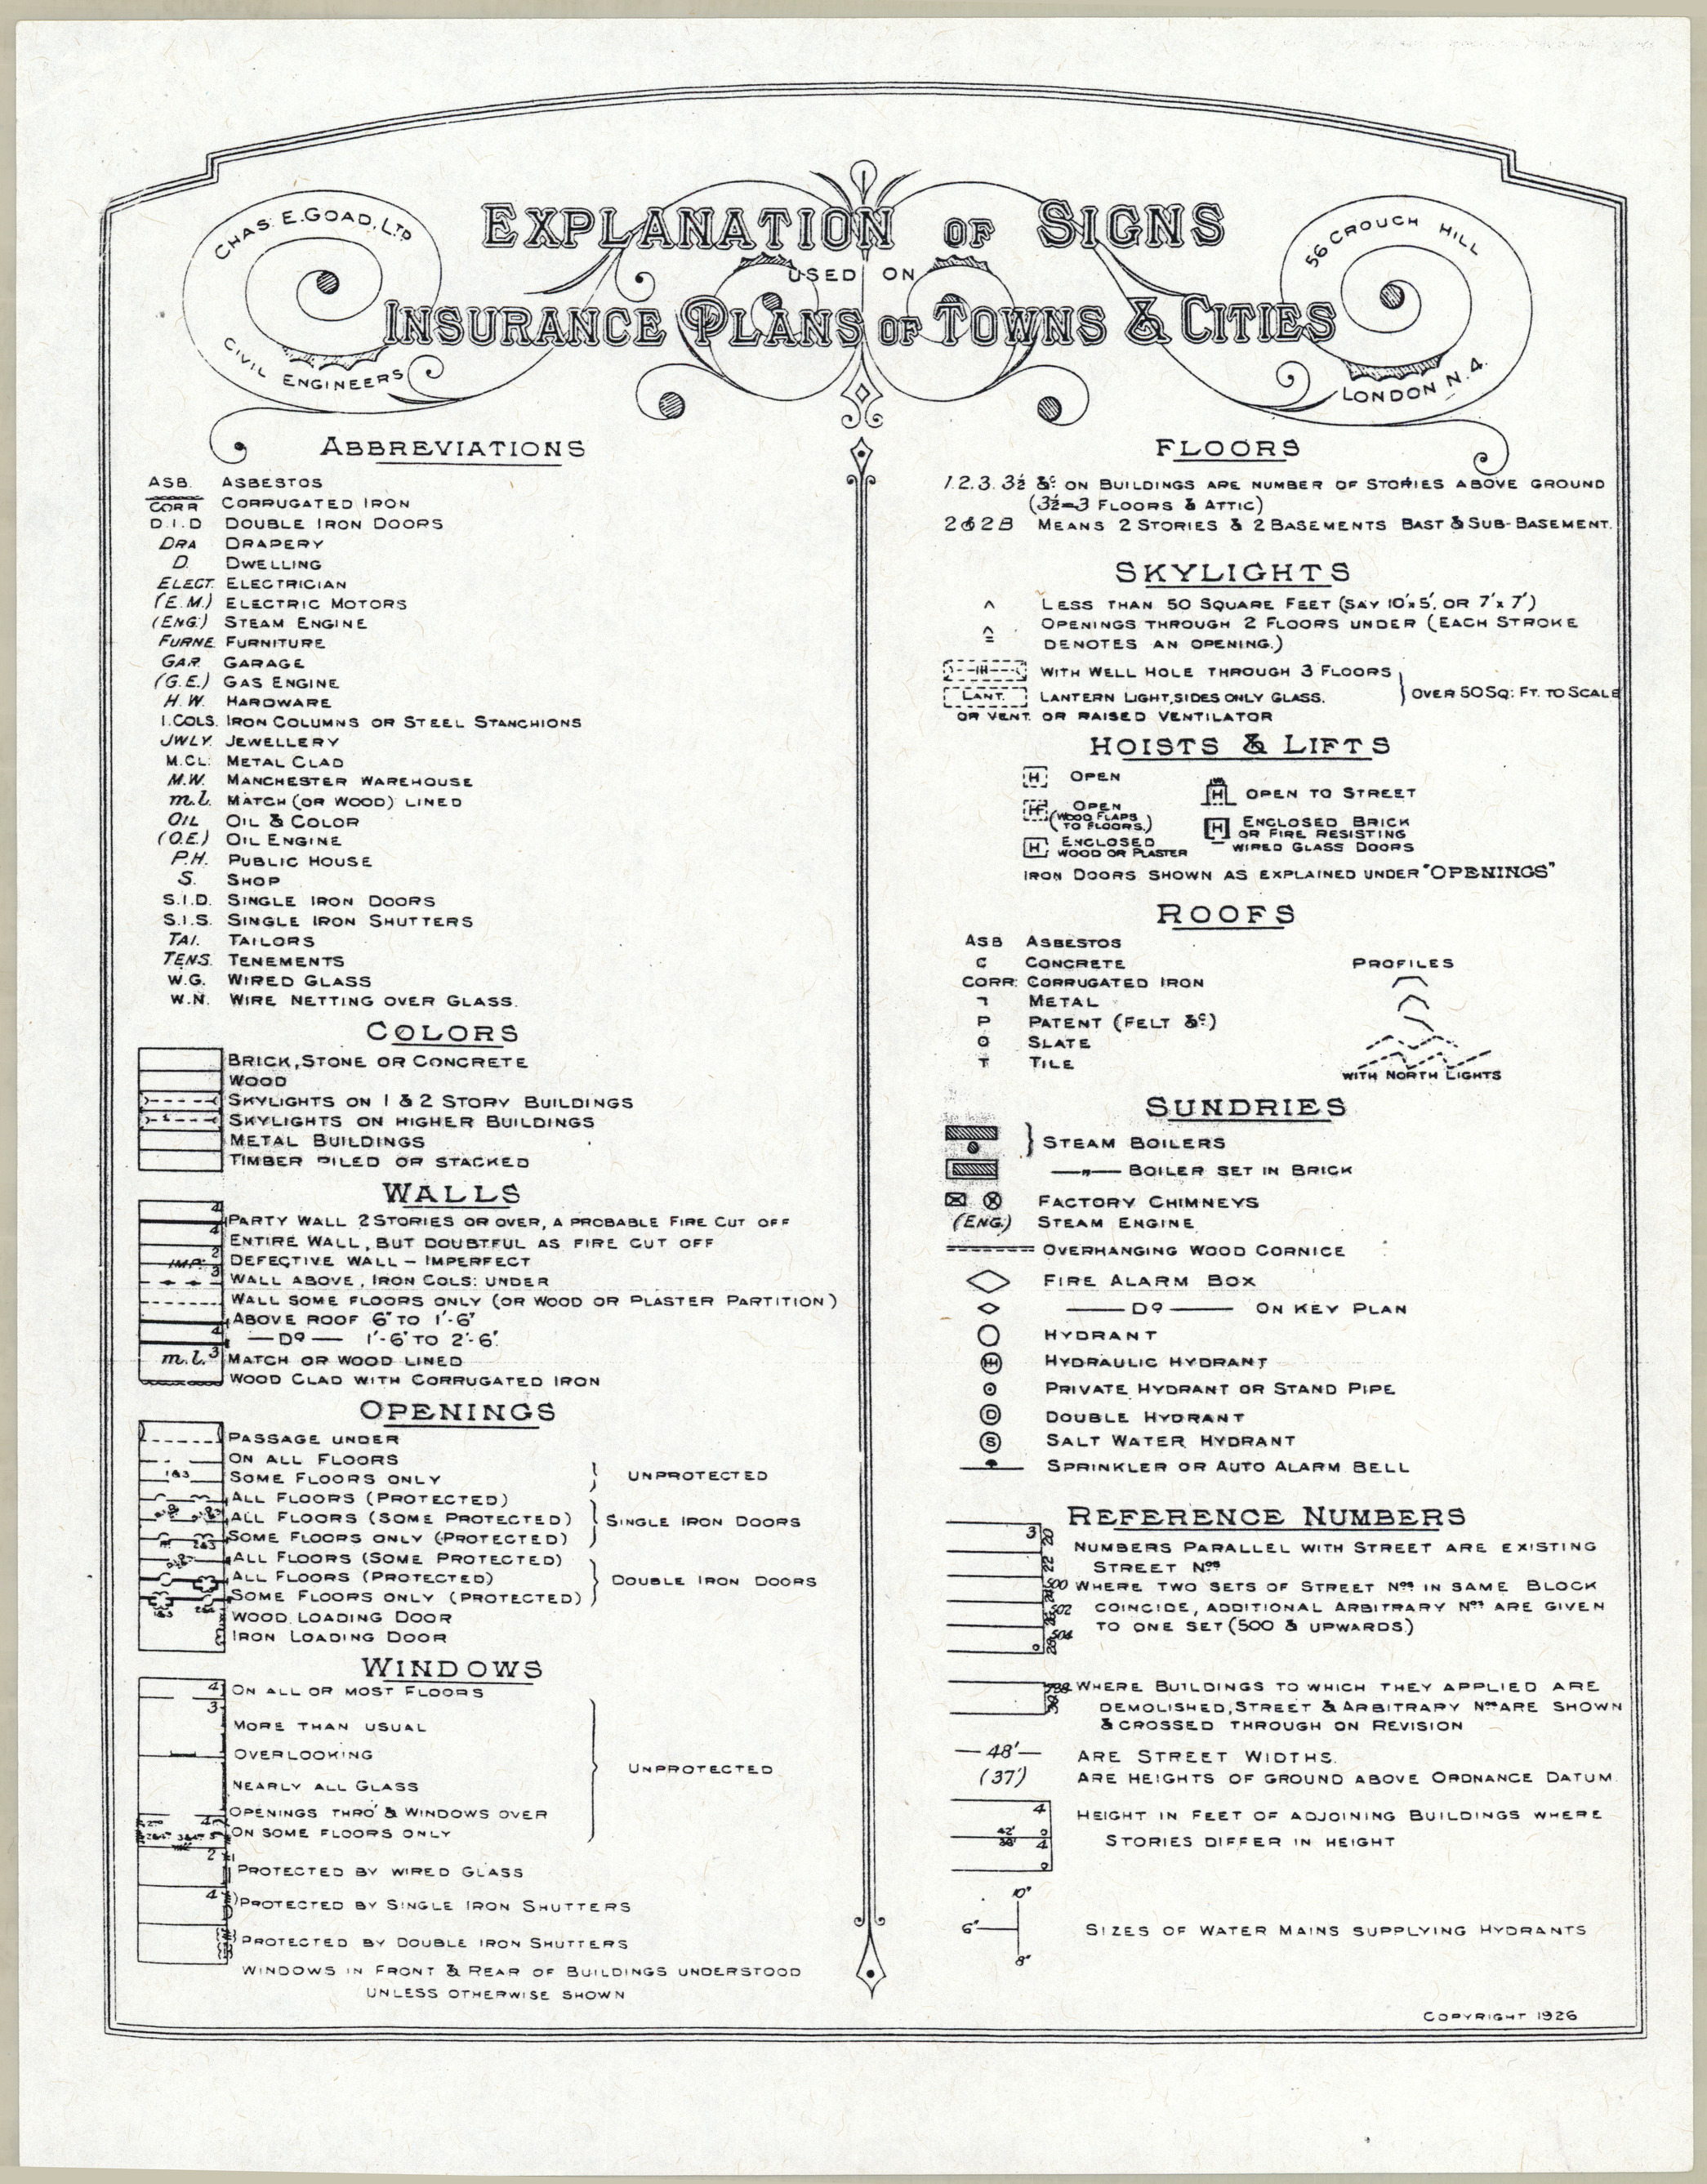 Key to symbols 1911 Fire Insurance Plan